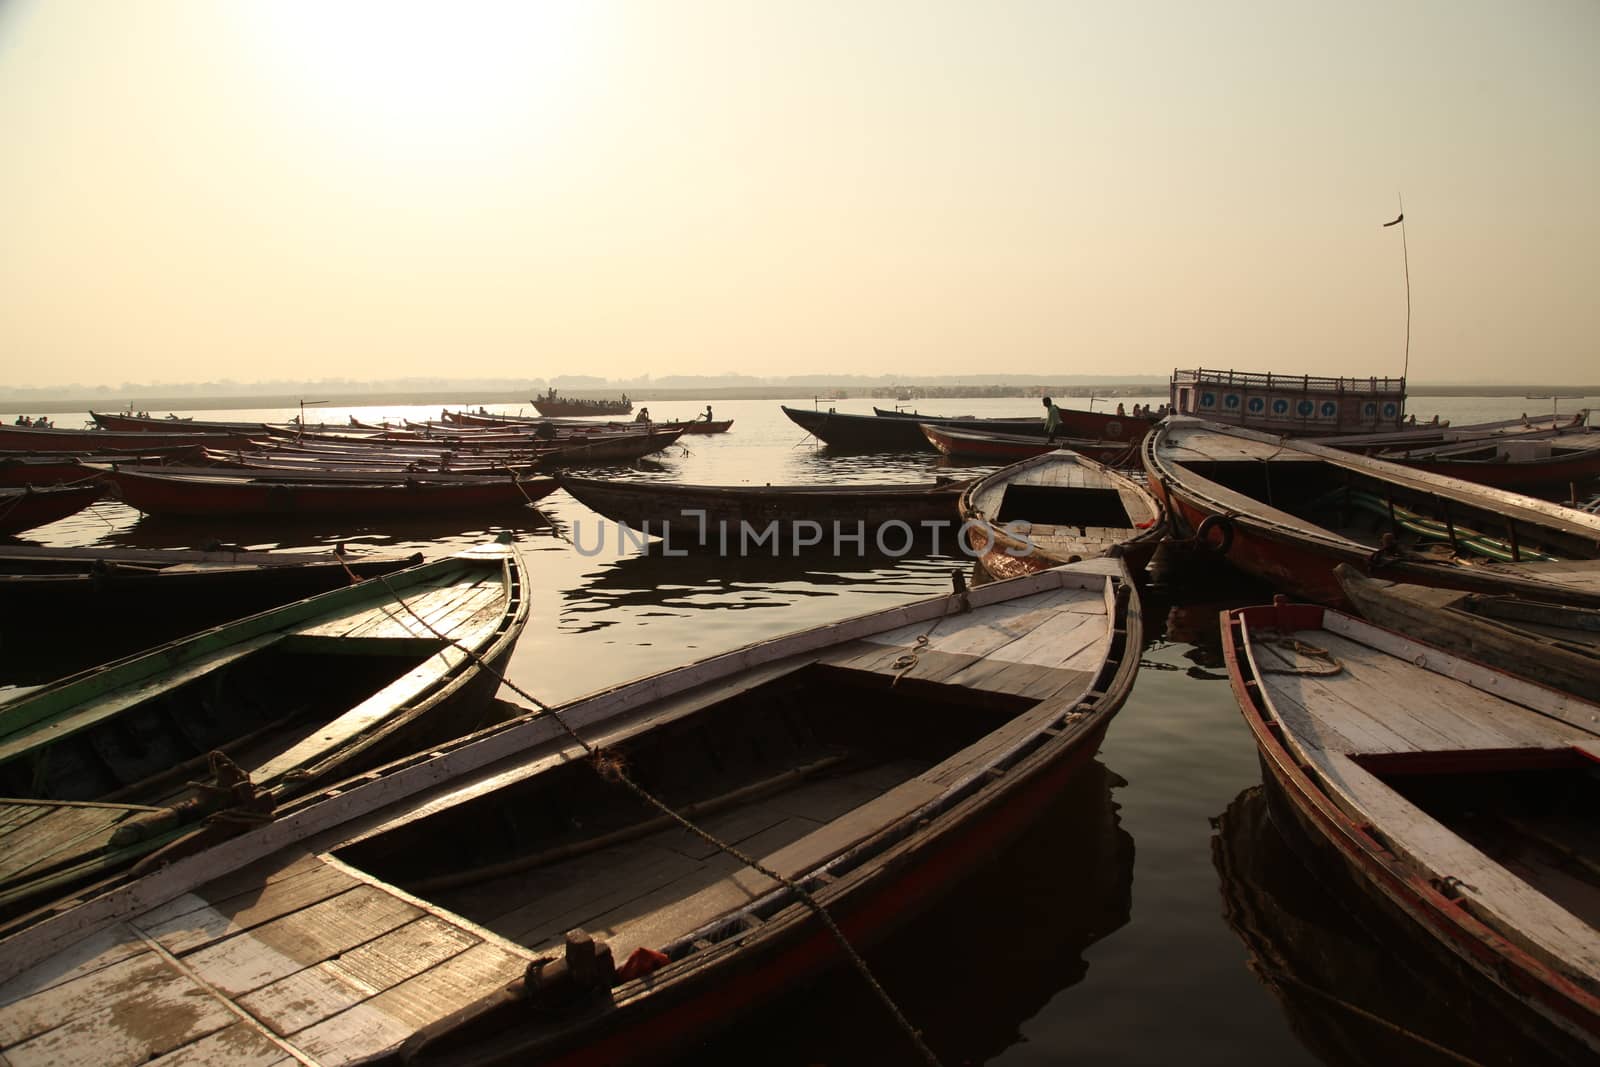 Tourist Place Varanasi India